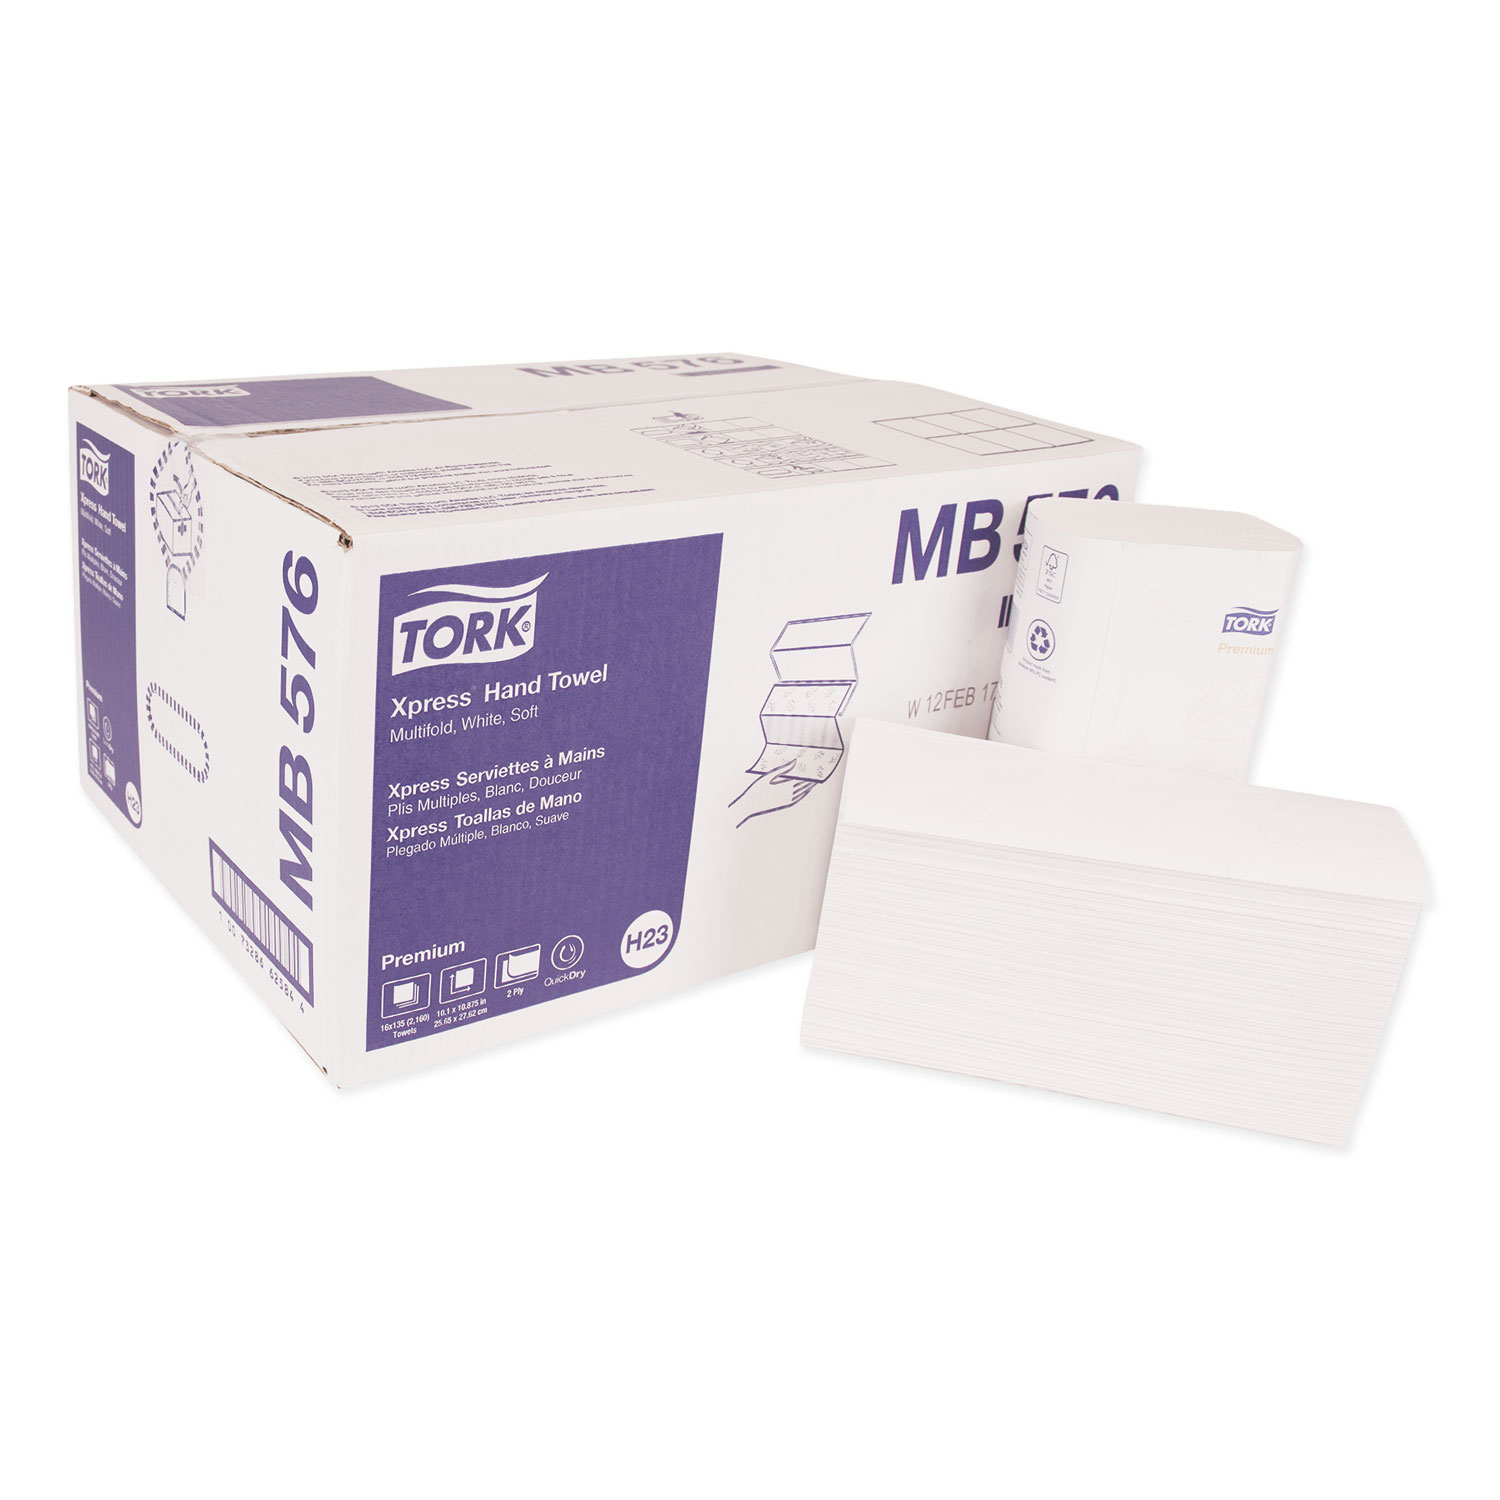  Tork MB576 Premium Multifold Towel, 2-Ply, 10.1 x 10.88, White, 135/Pack 16 Packs/Carton (TRKMB576) 